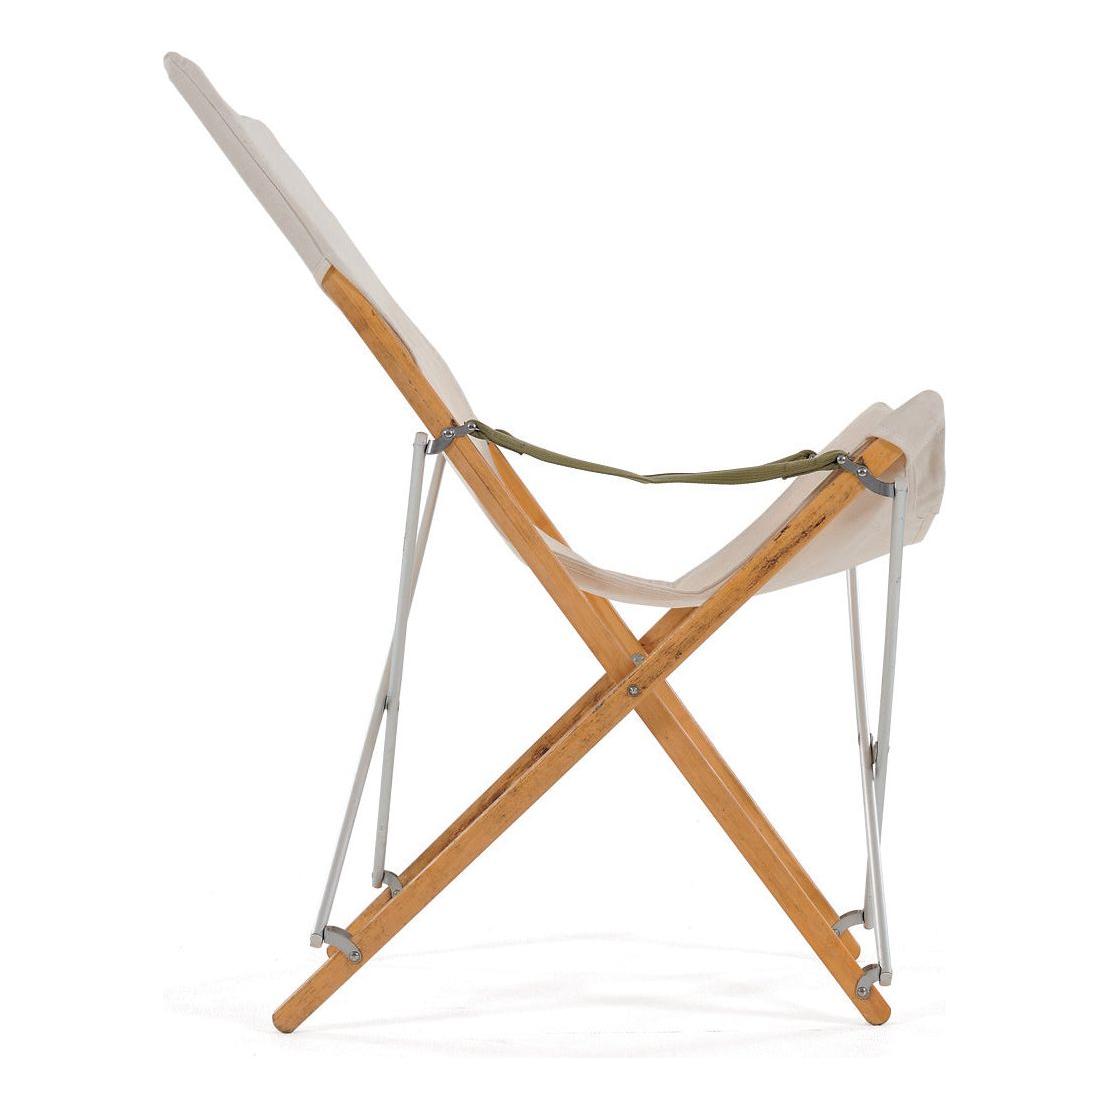 Snow Peak Gear Take! Bamboo Chair, Long